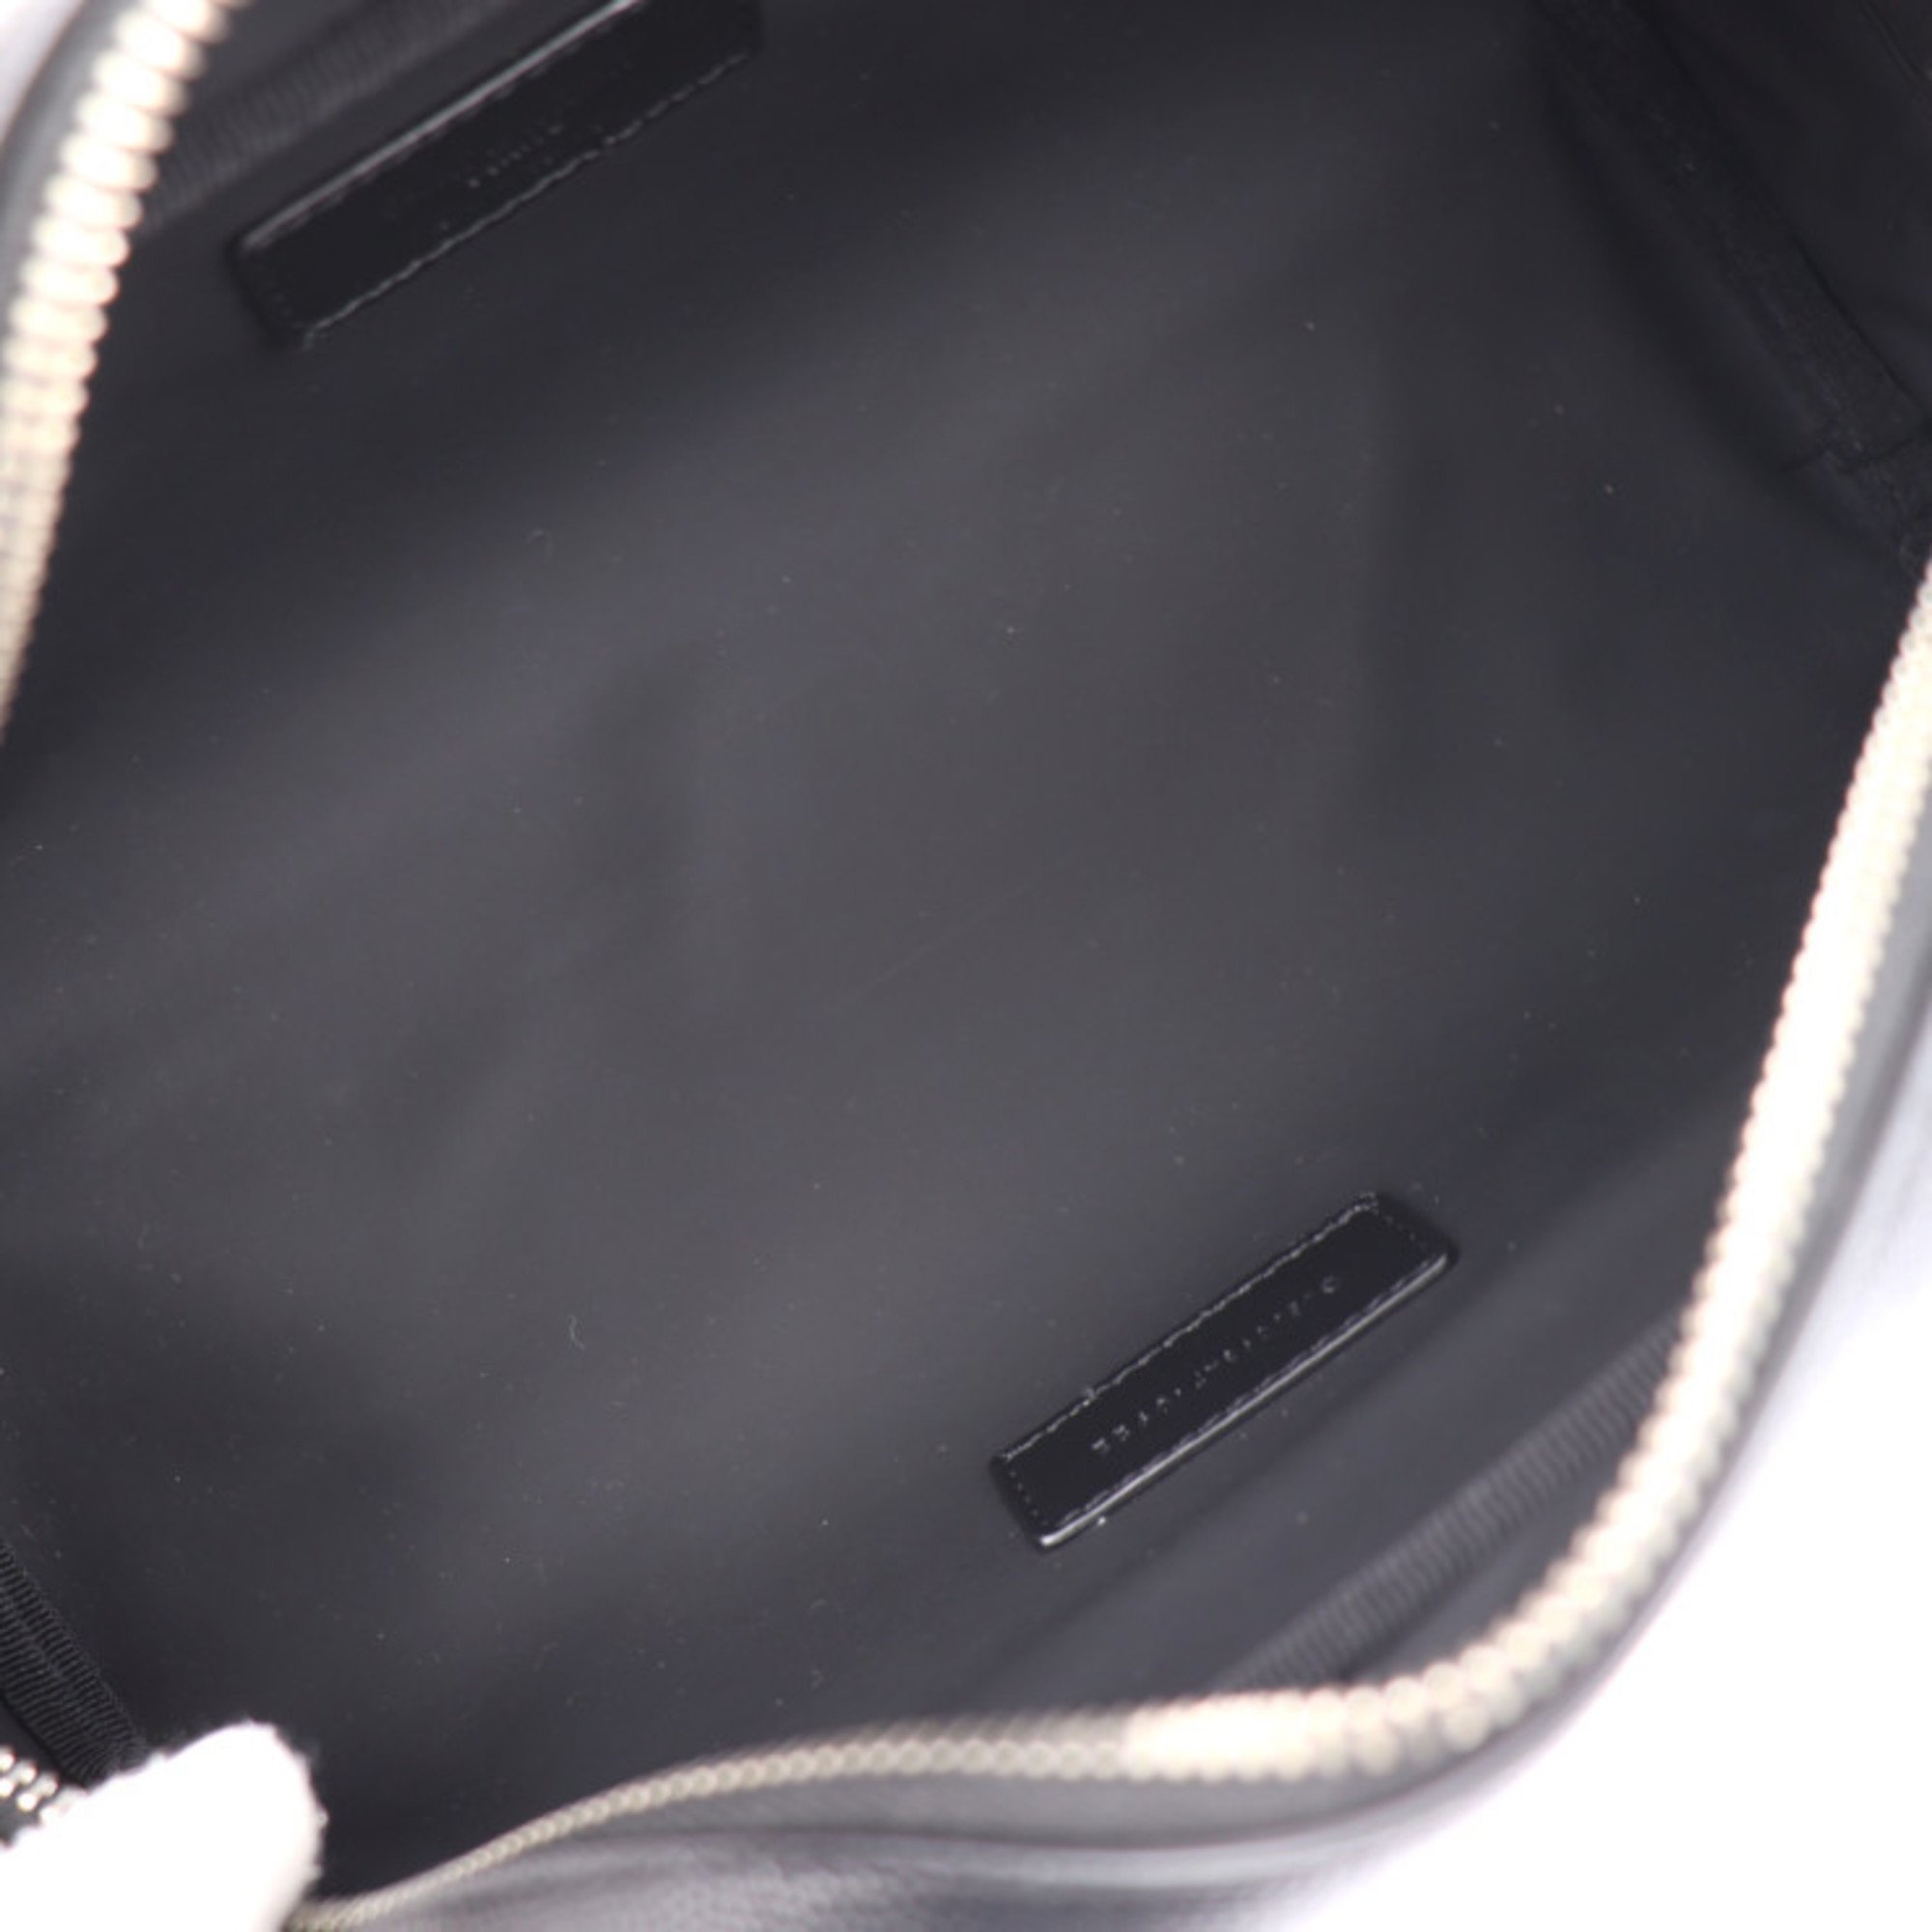 SAINT LAURENT Grooming Case Second Bag 609347 Calf Leather Black Clutch Pouch